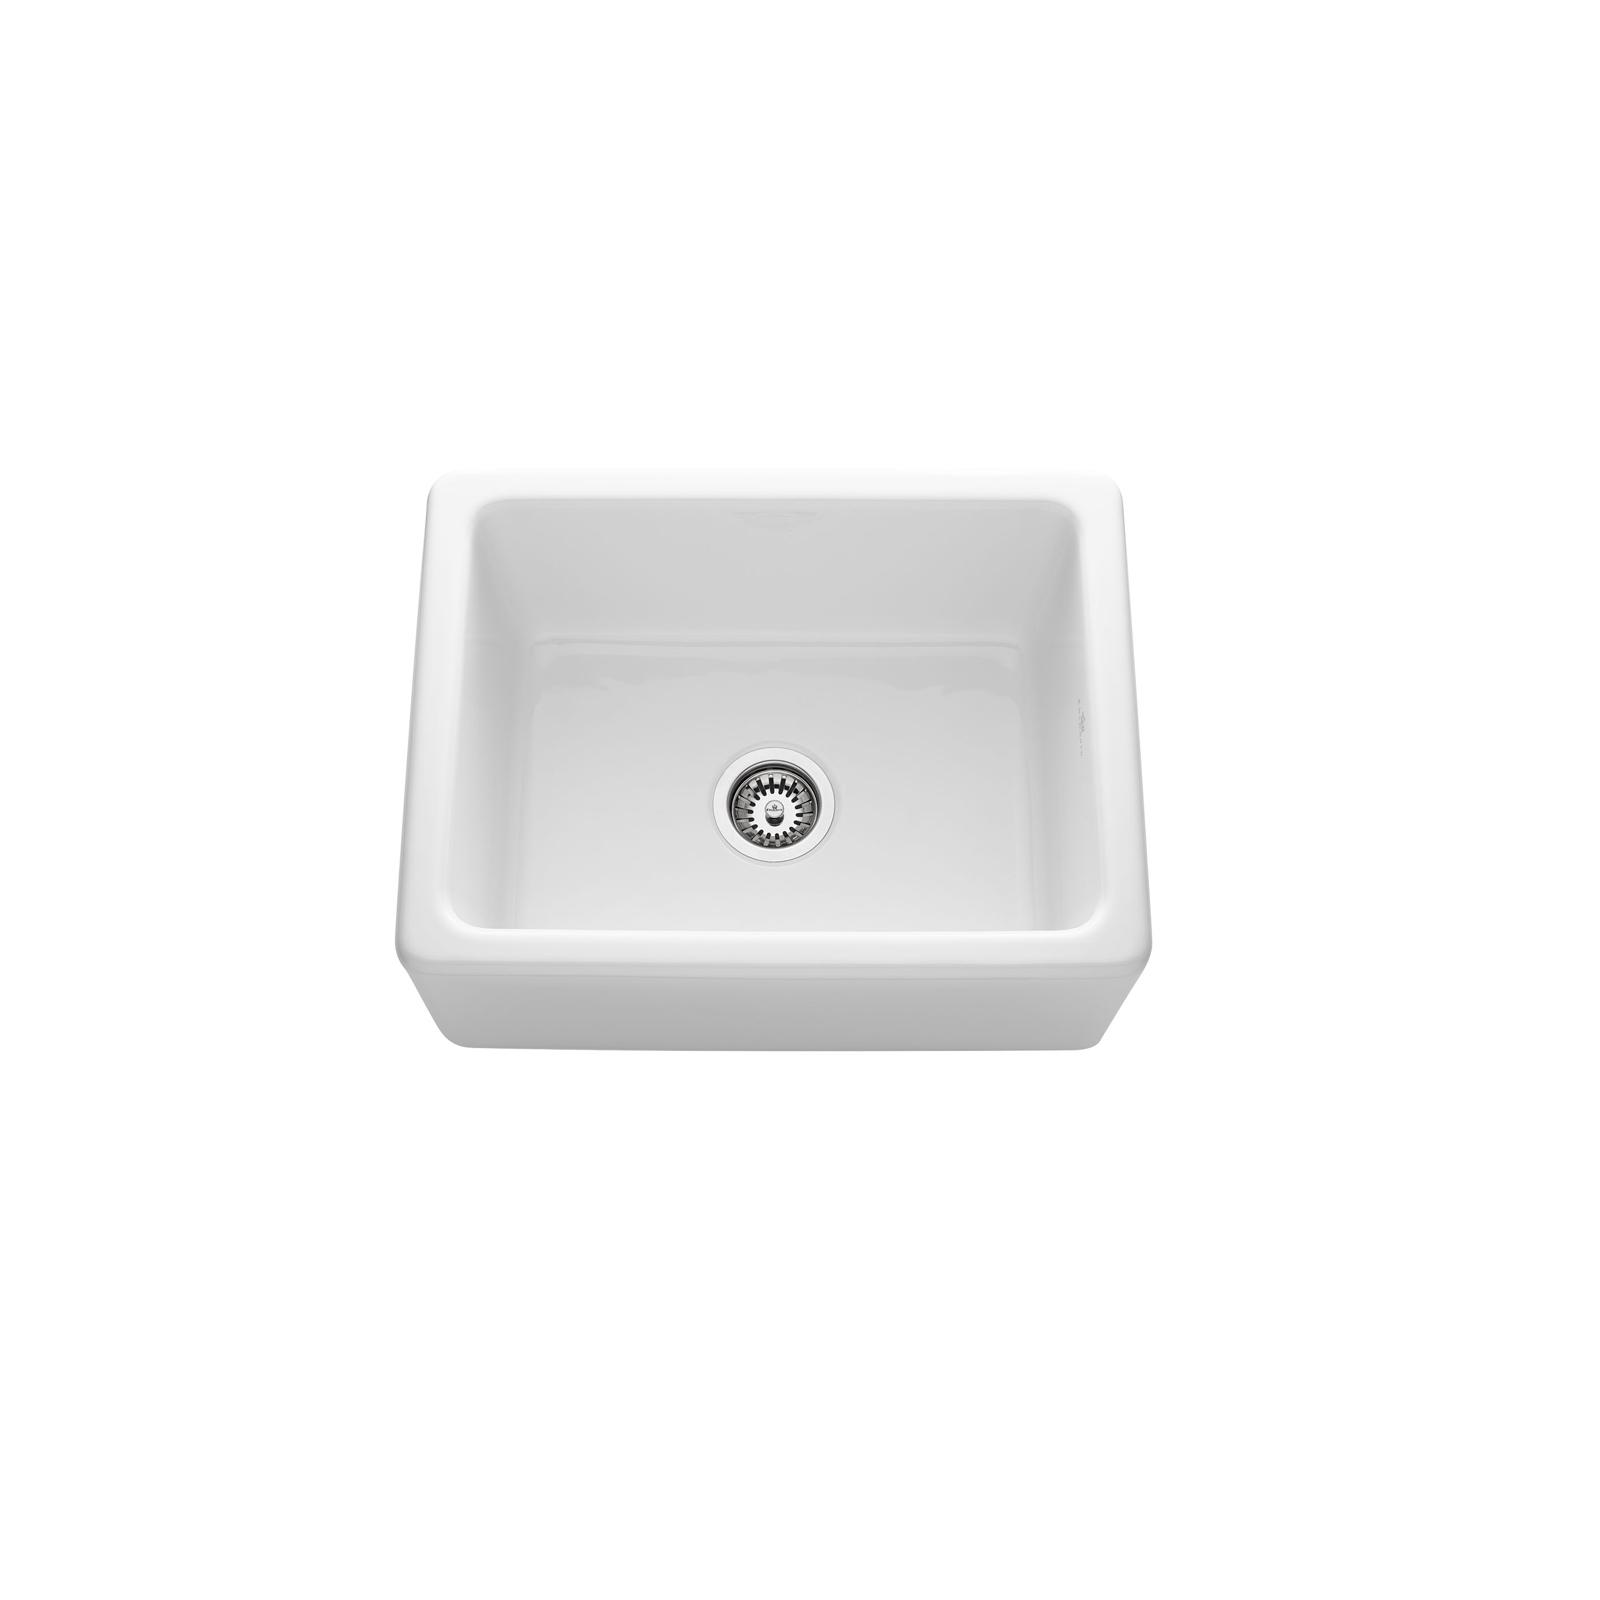 High-quality sink Philippe I - single bowl, ceramic